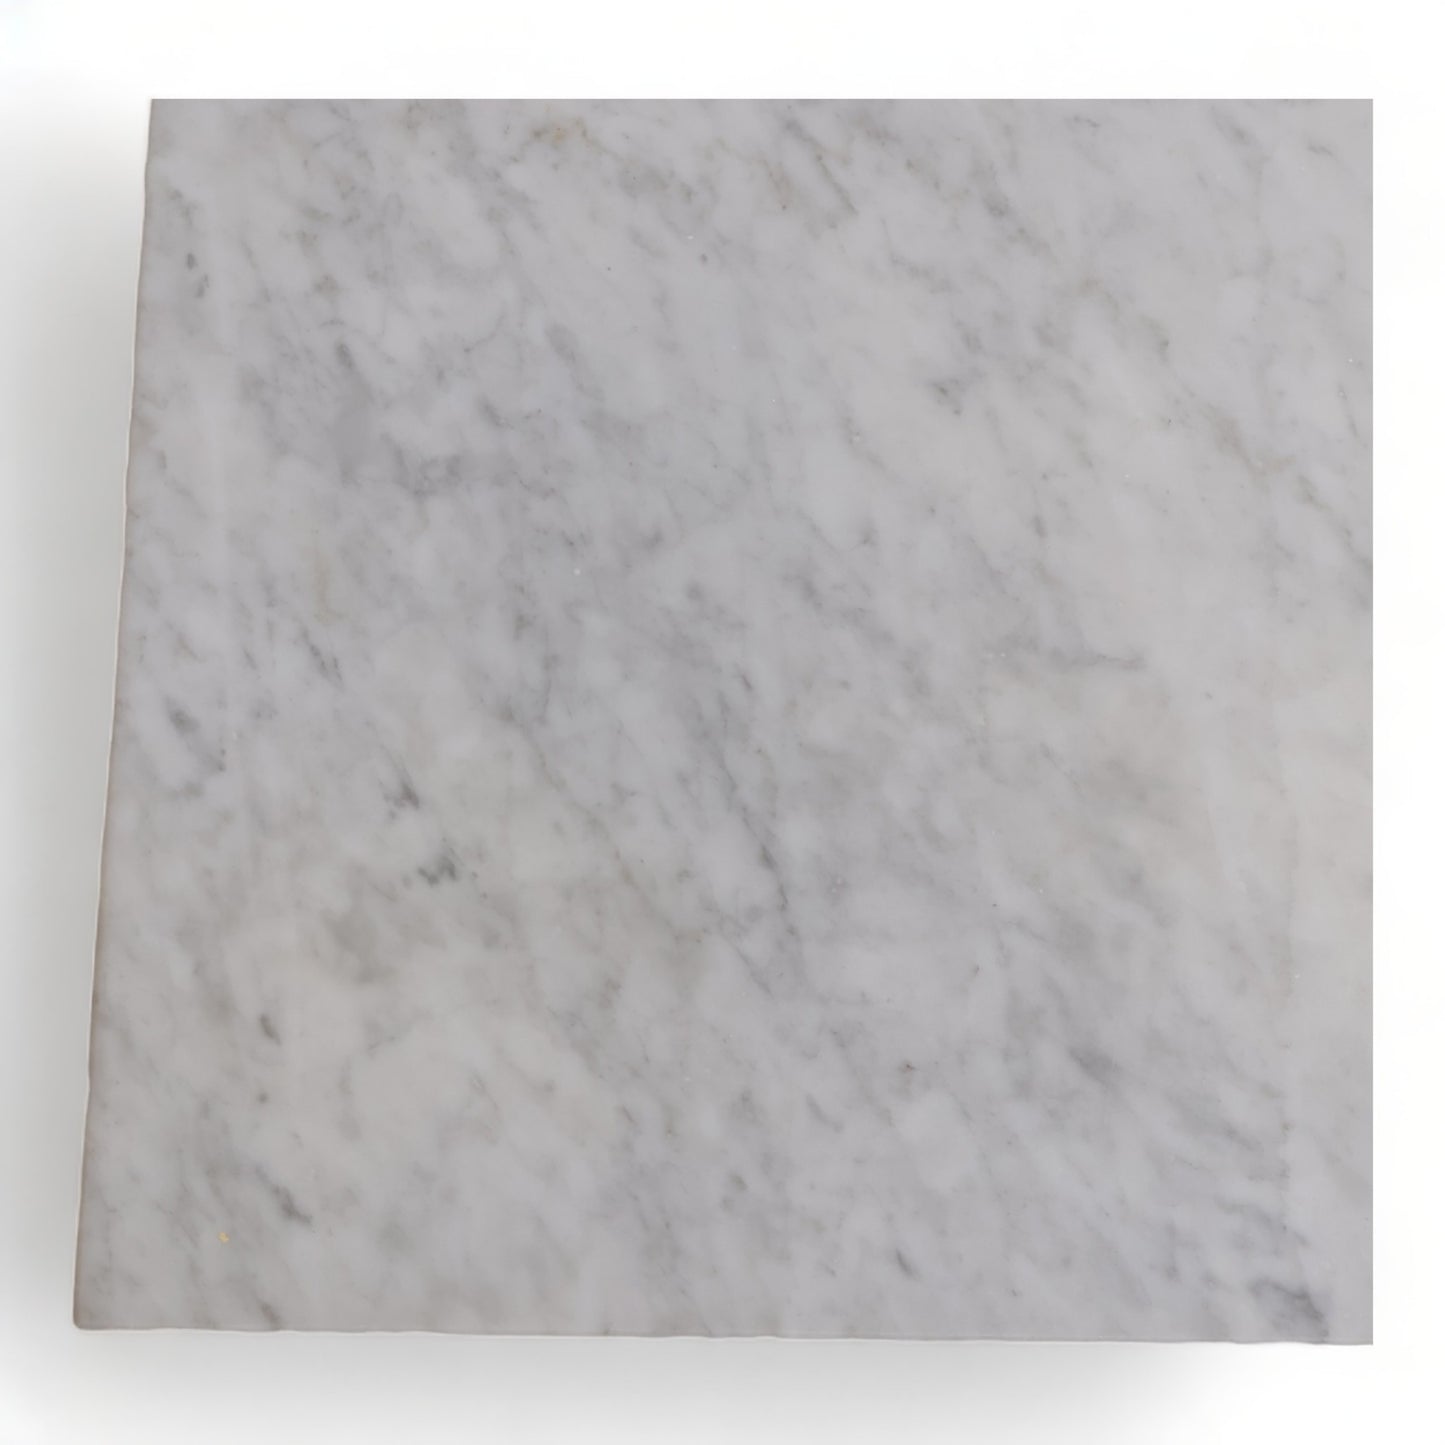 Kvalitetssikret | Sofabord i imitert marmor